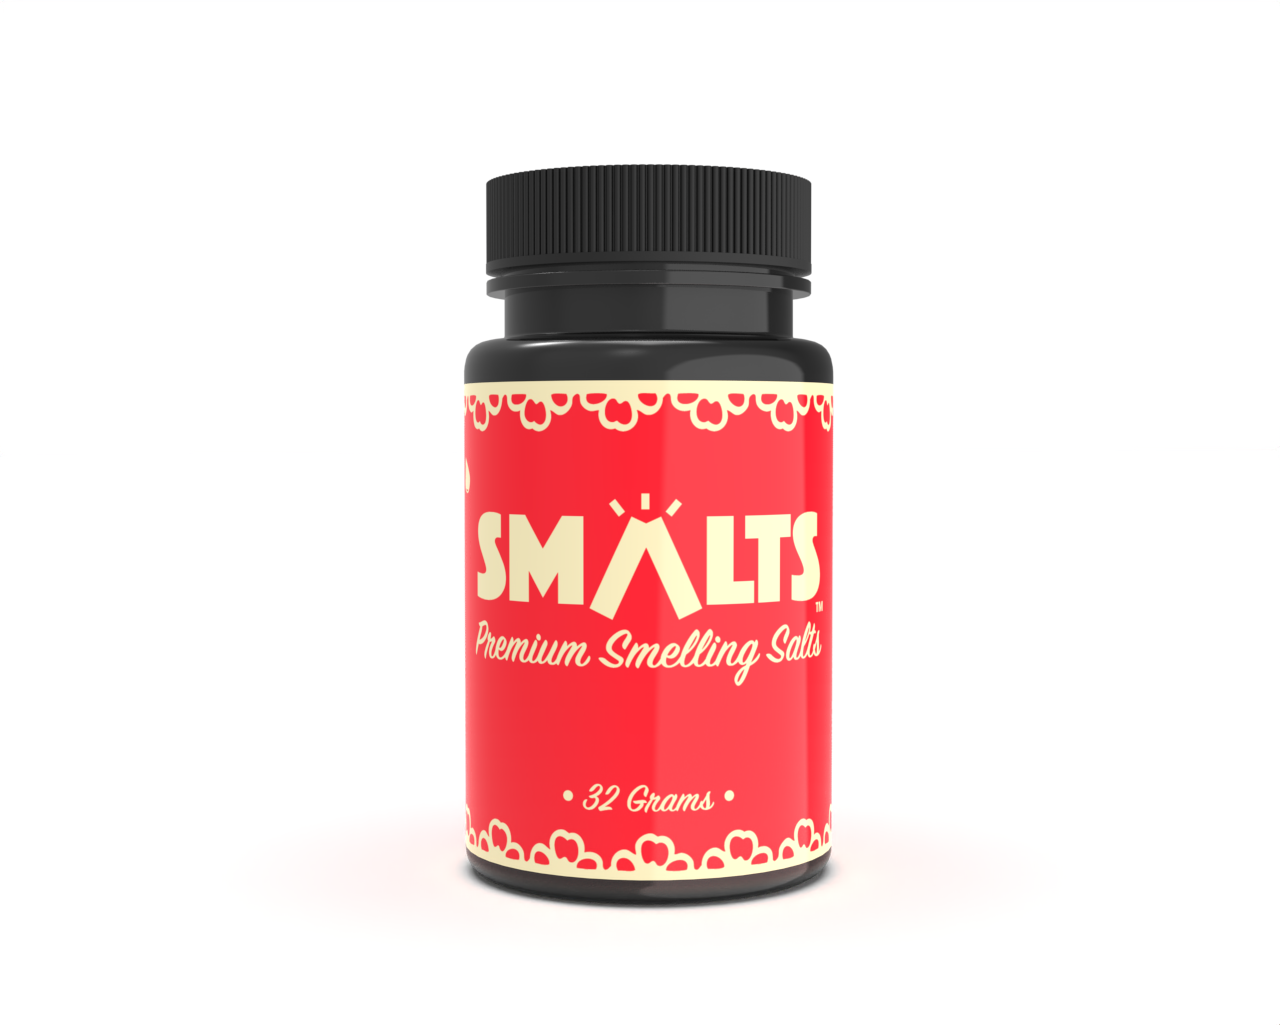 Smalts - Premium Smelling Salts - Bottle